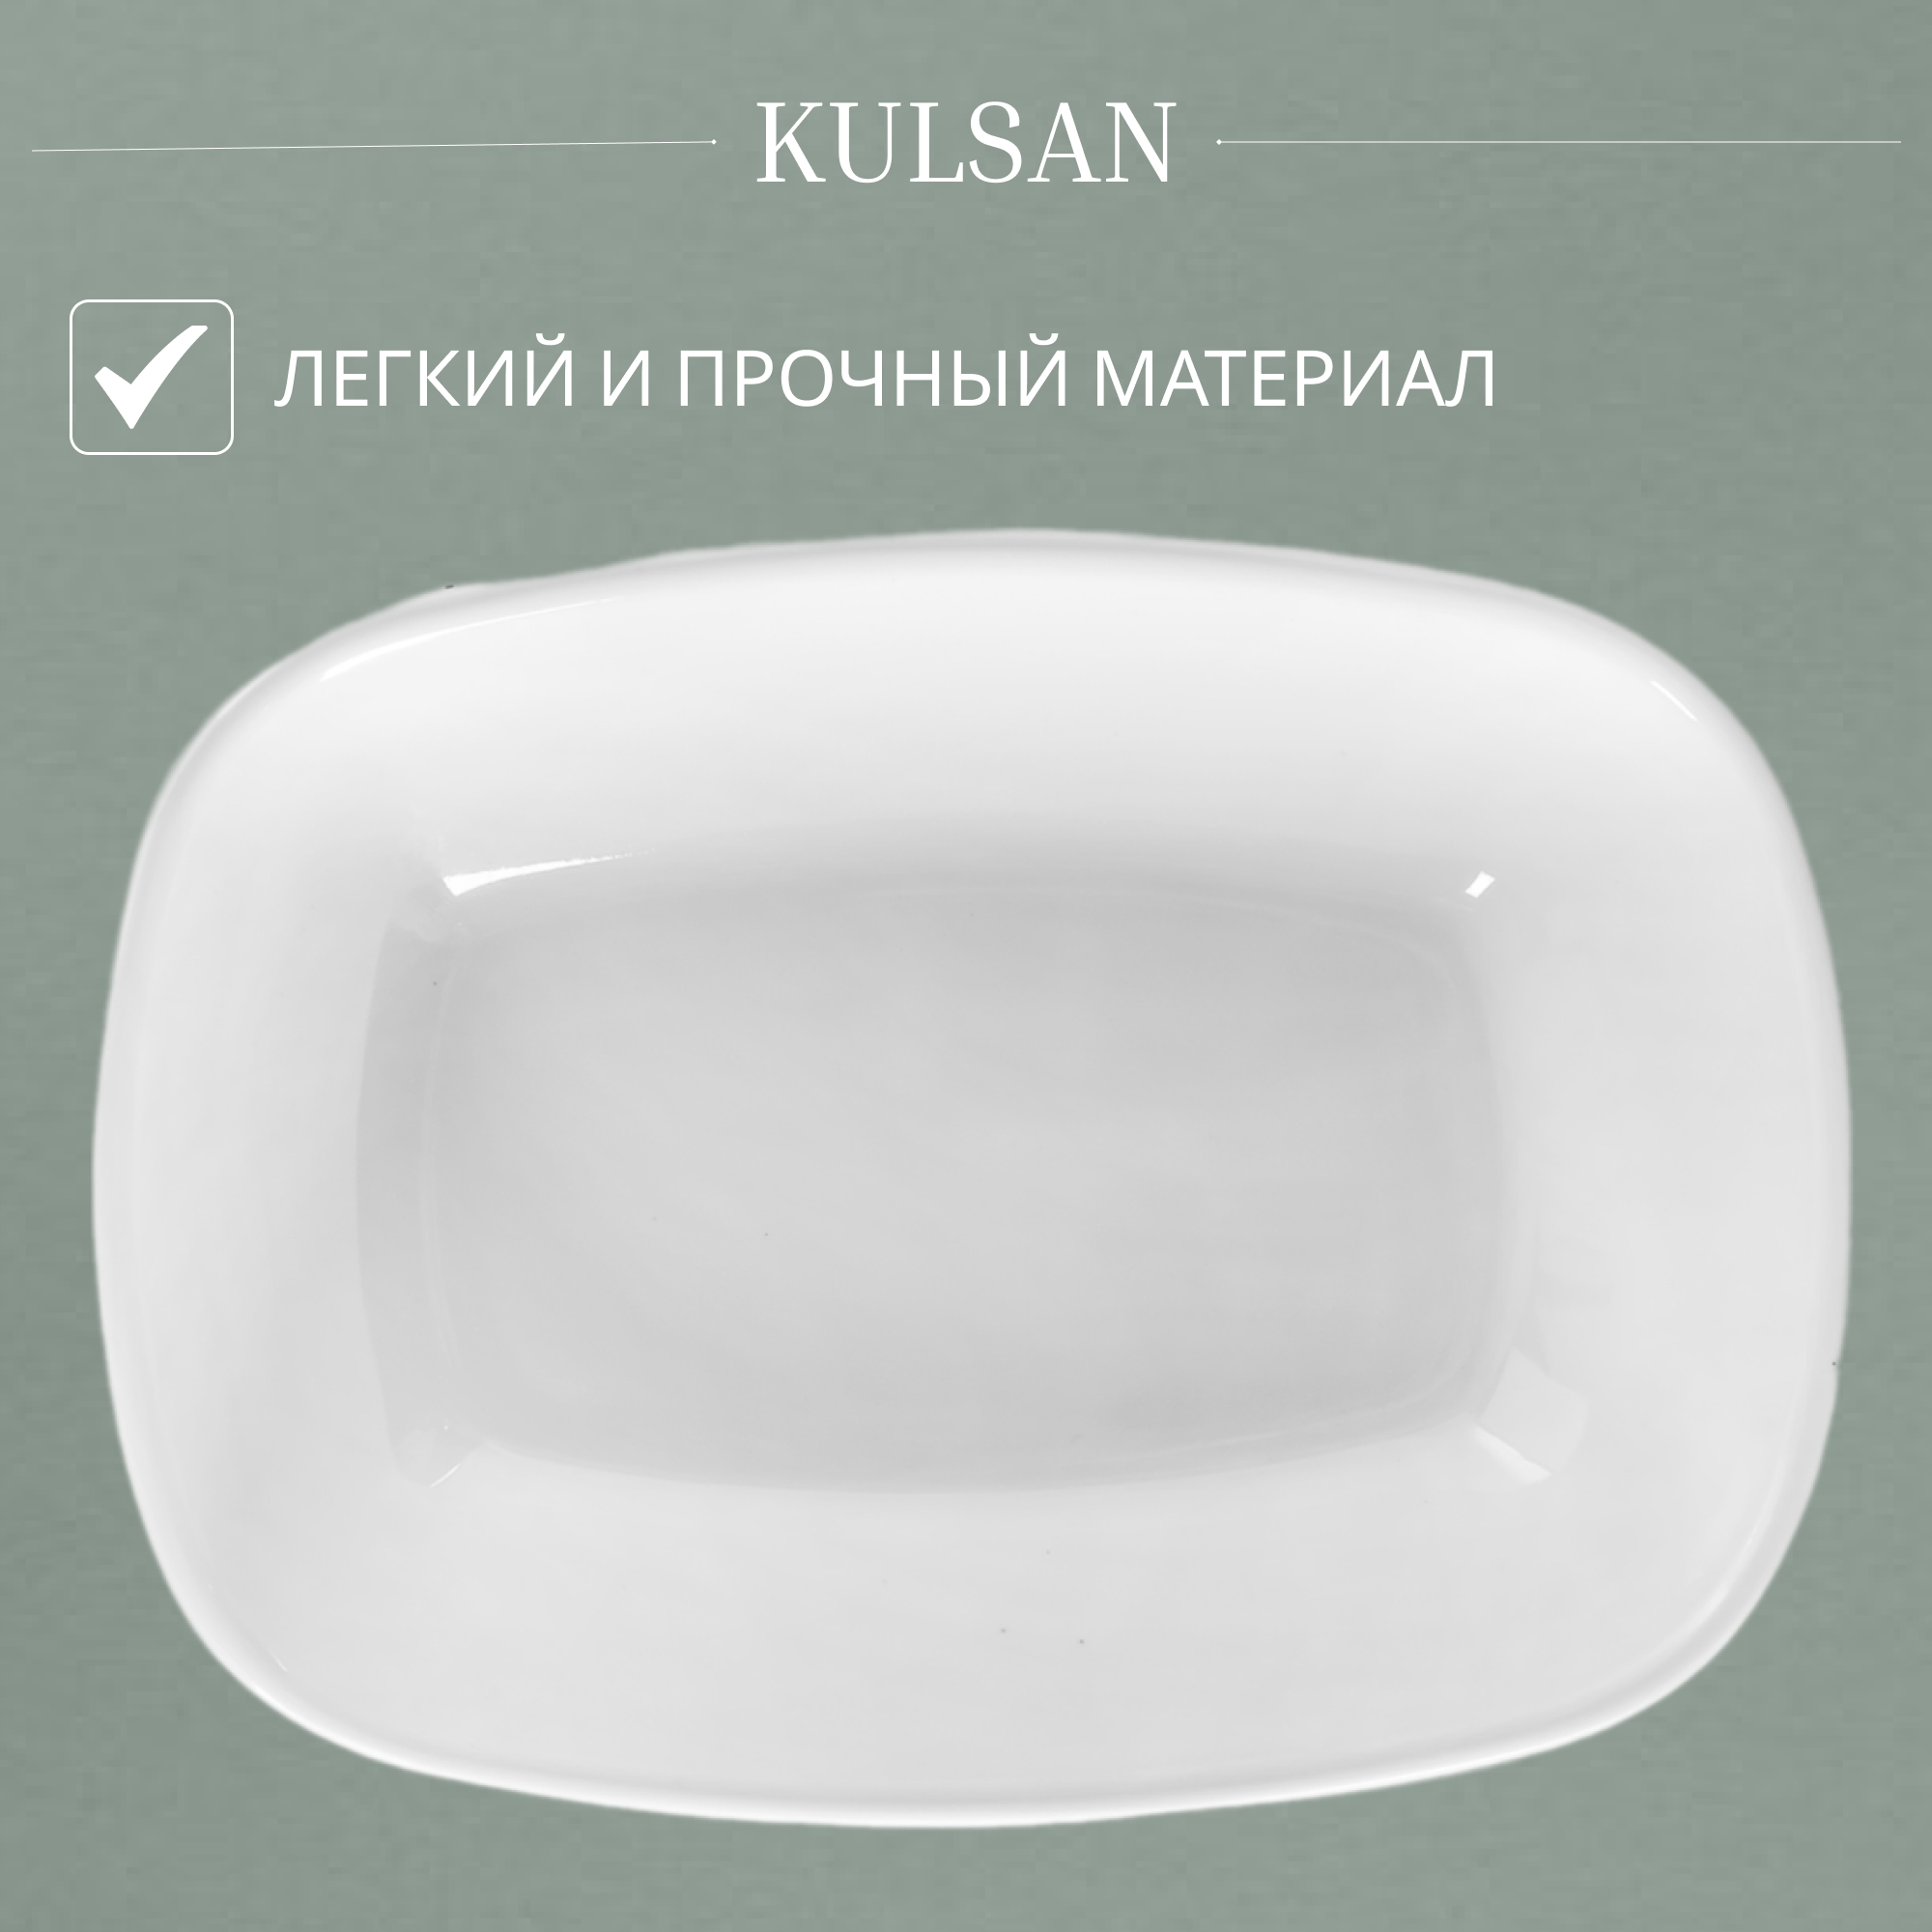 Тарелка Kulsan с крышкой, цвет белый - фото 4